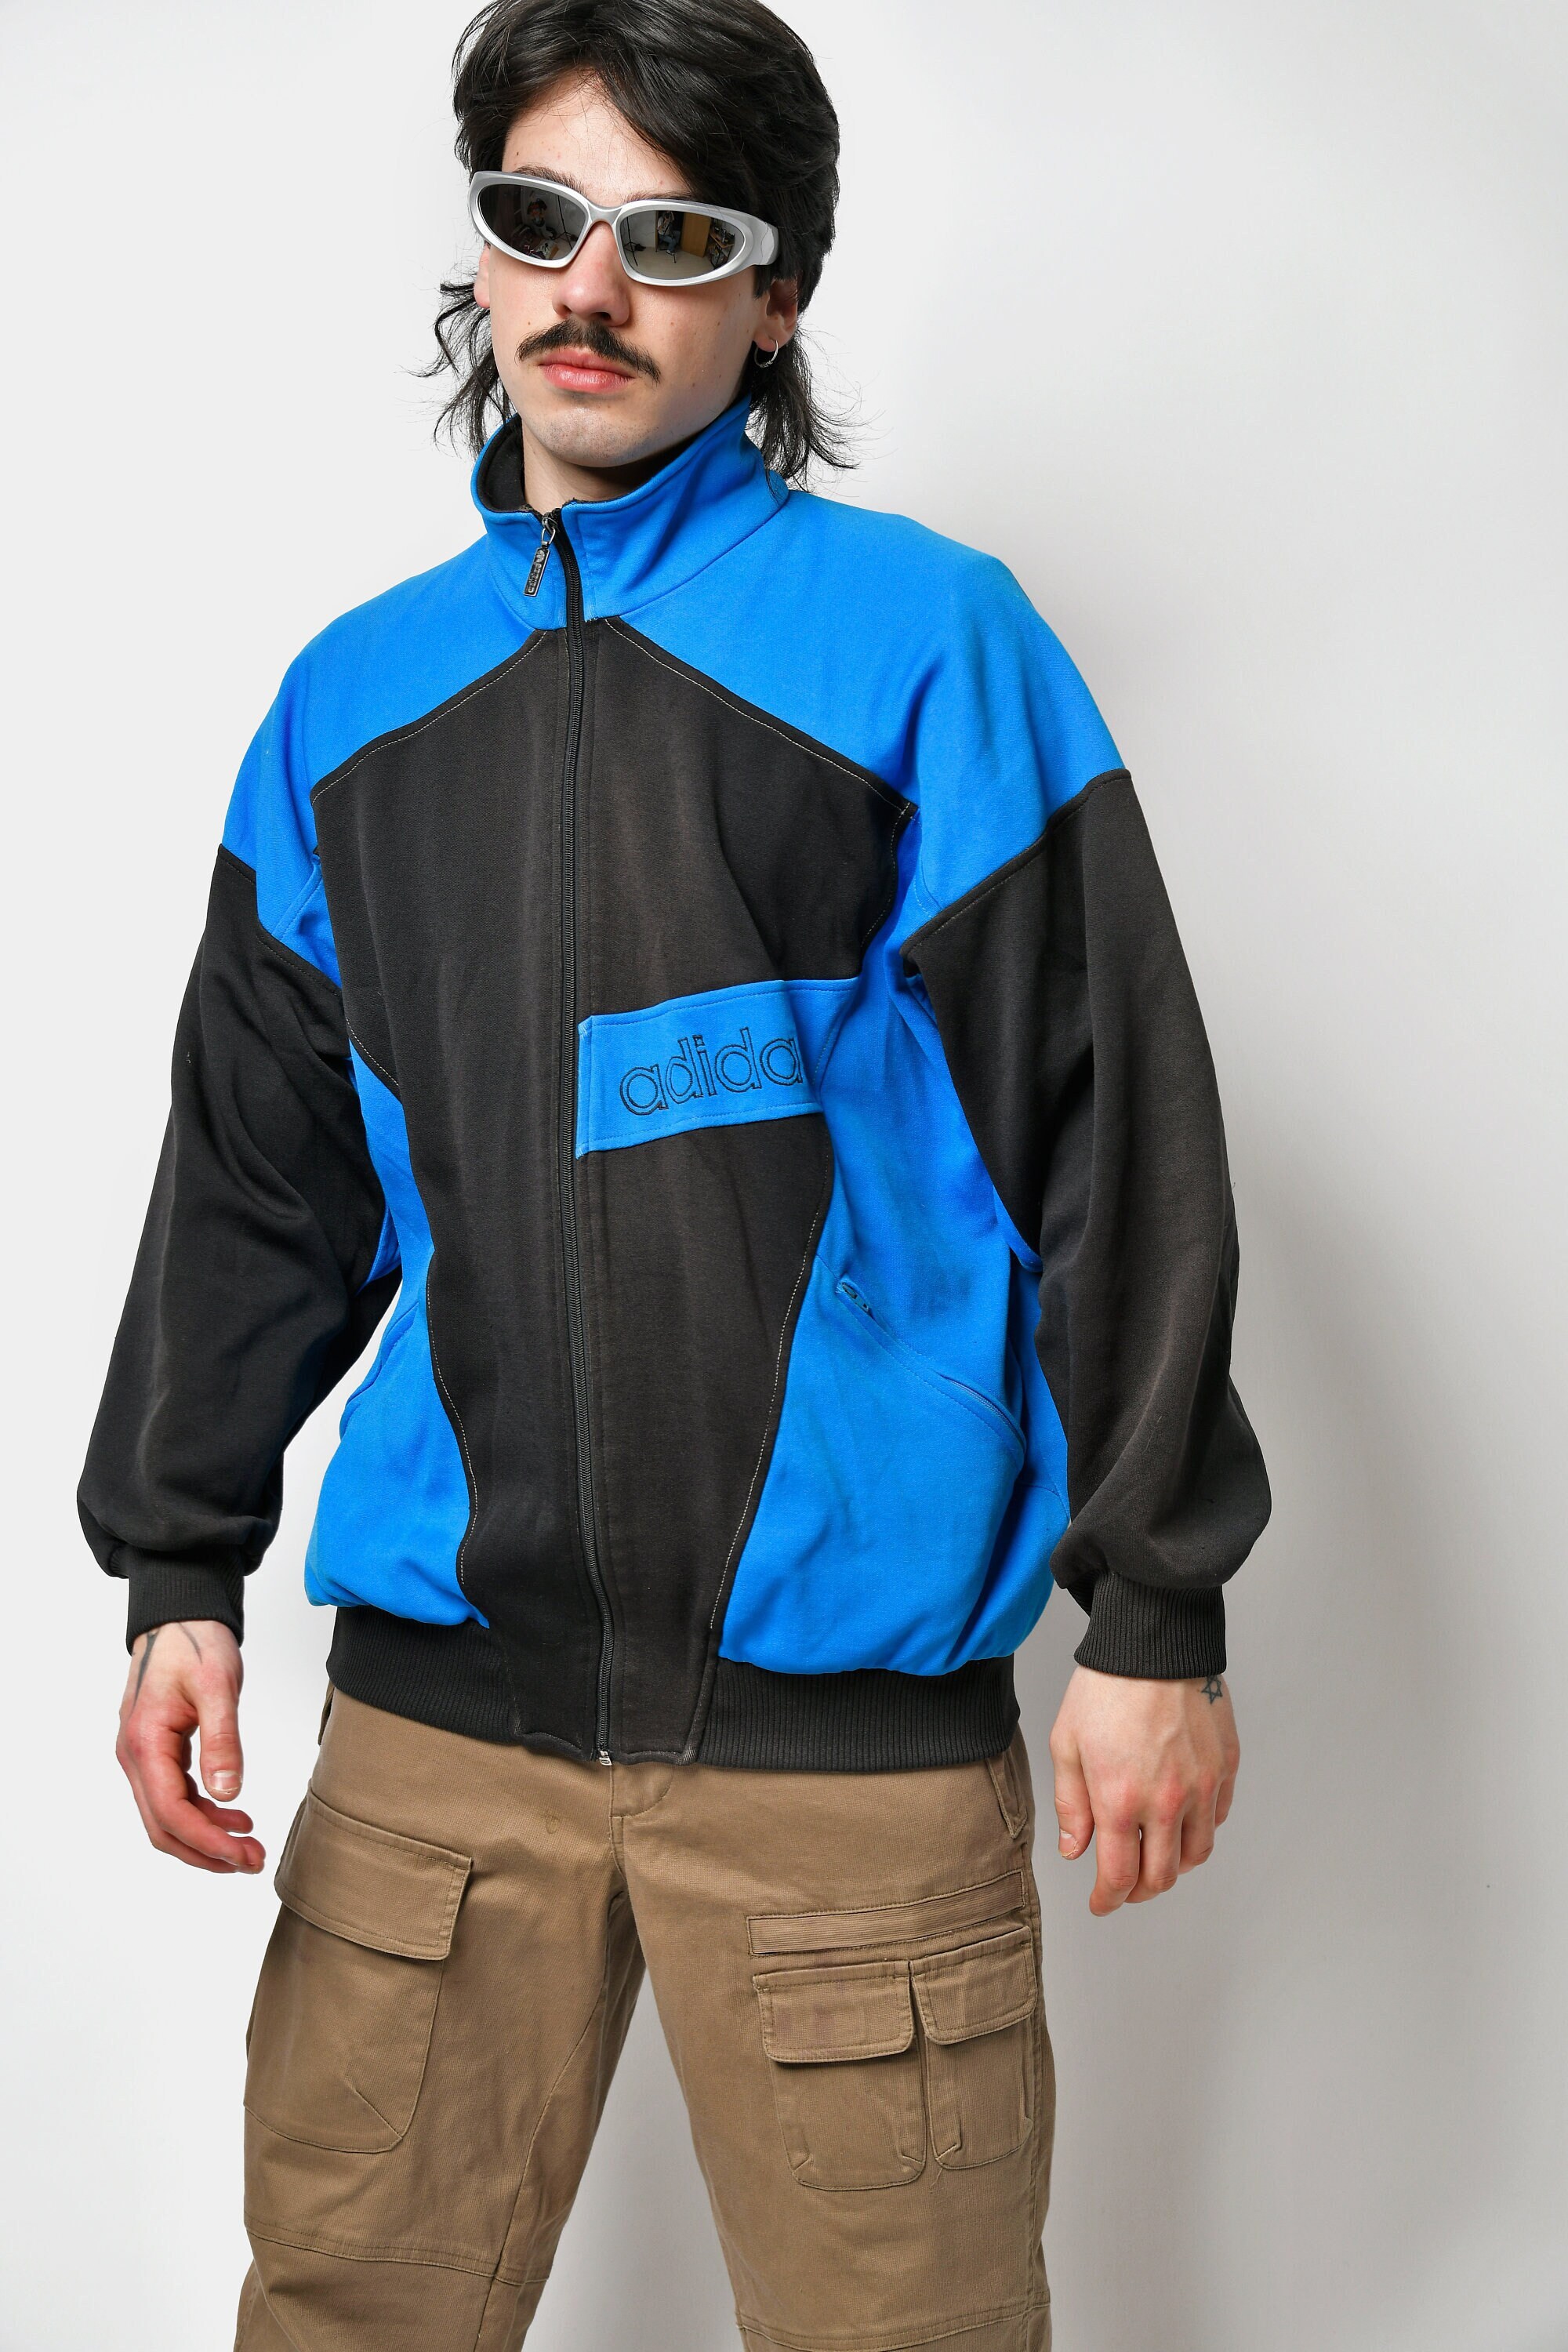 Old School 80s ADIDAS track jacket men blue black colour | 90's style  vintage retro full zip jacket active athletic jumper | Large L size